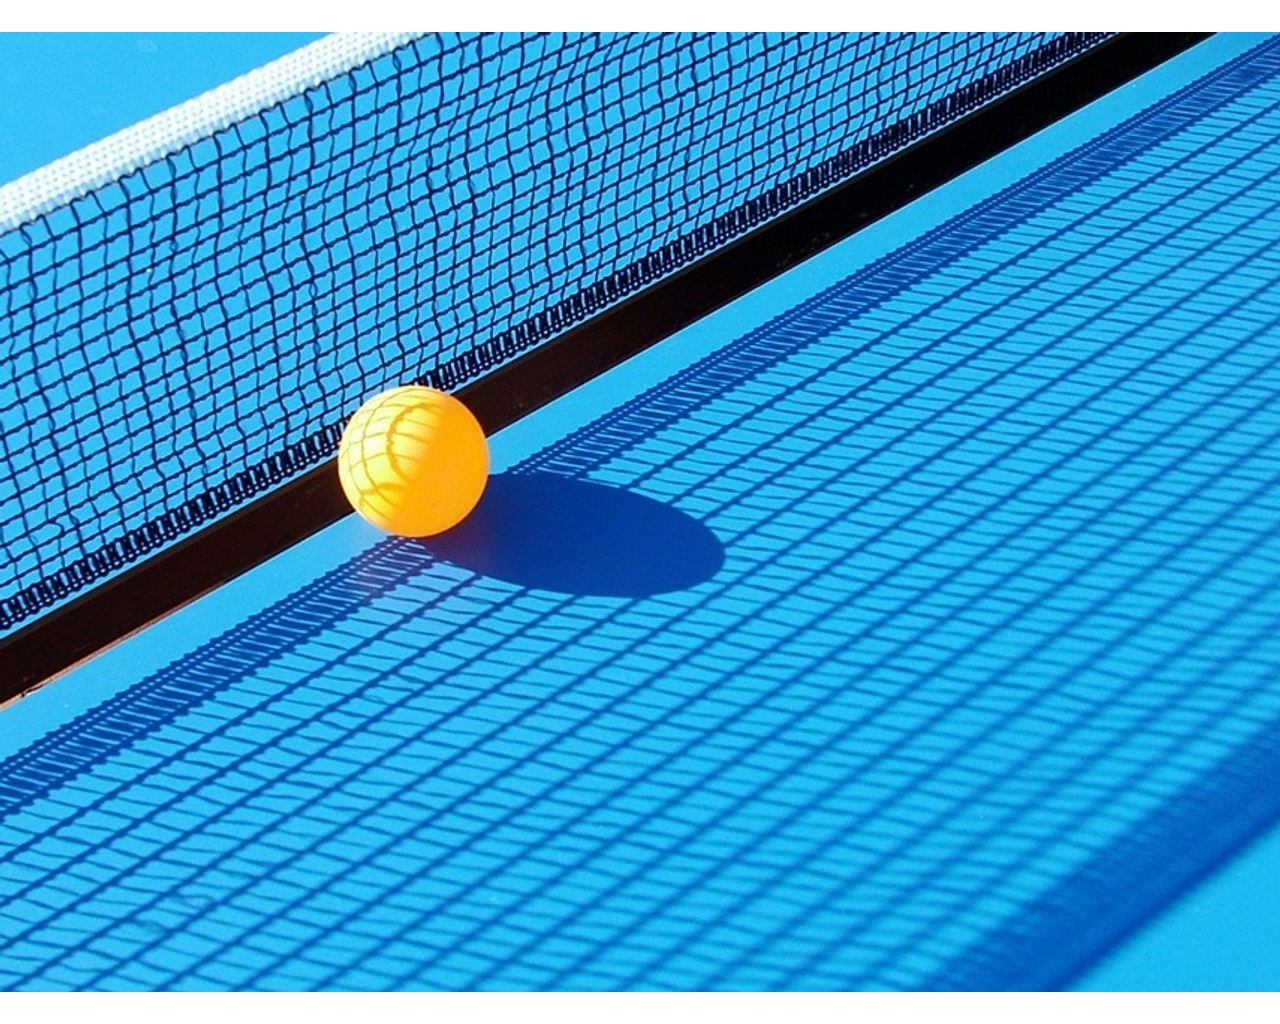 table_tennis